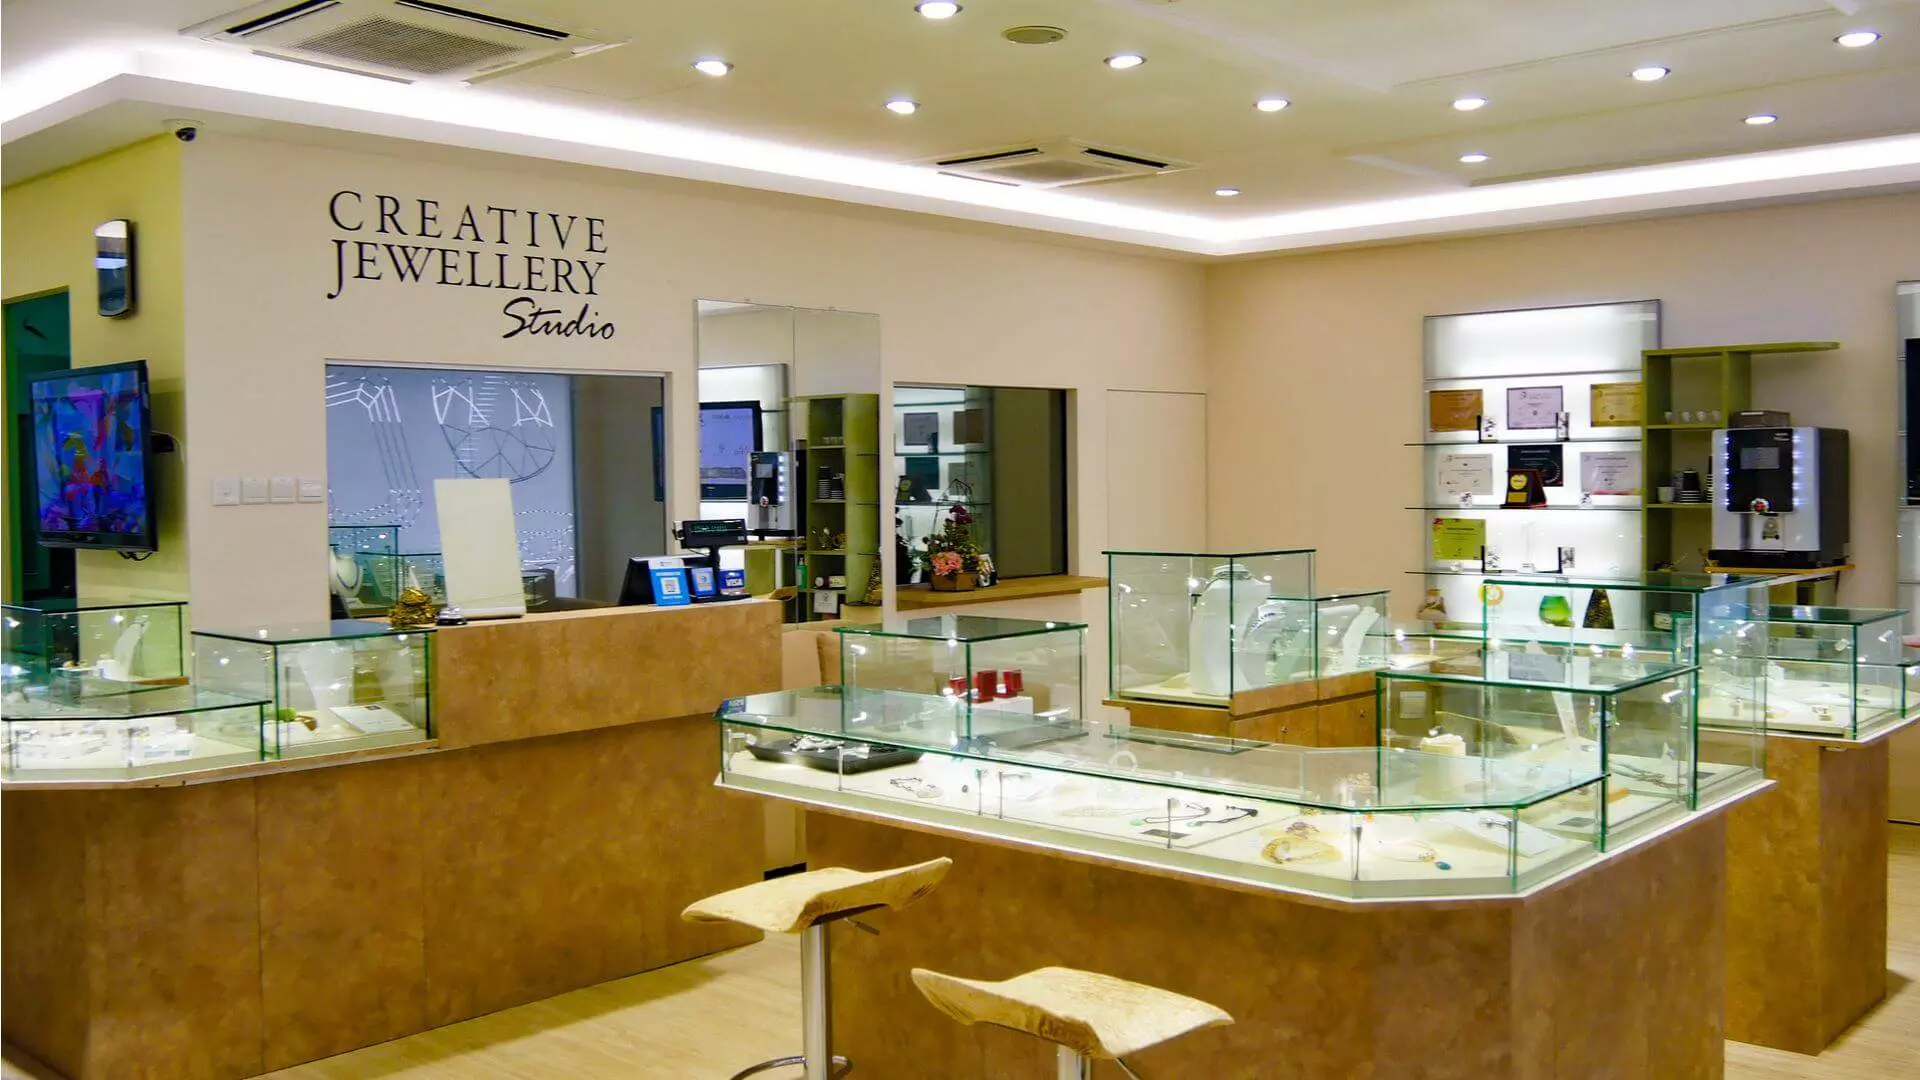 Creative Jewellery Studio: Free Retail & Display Space